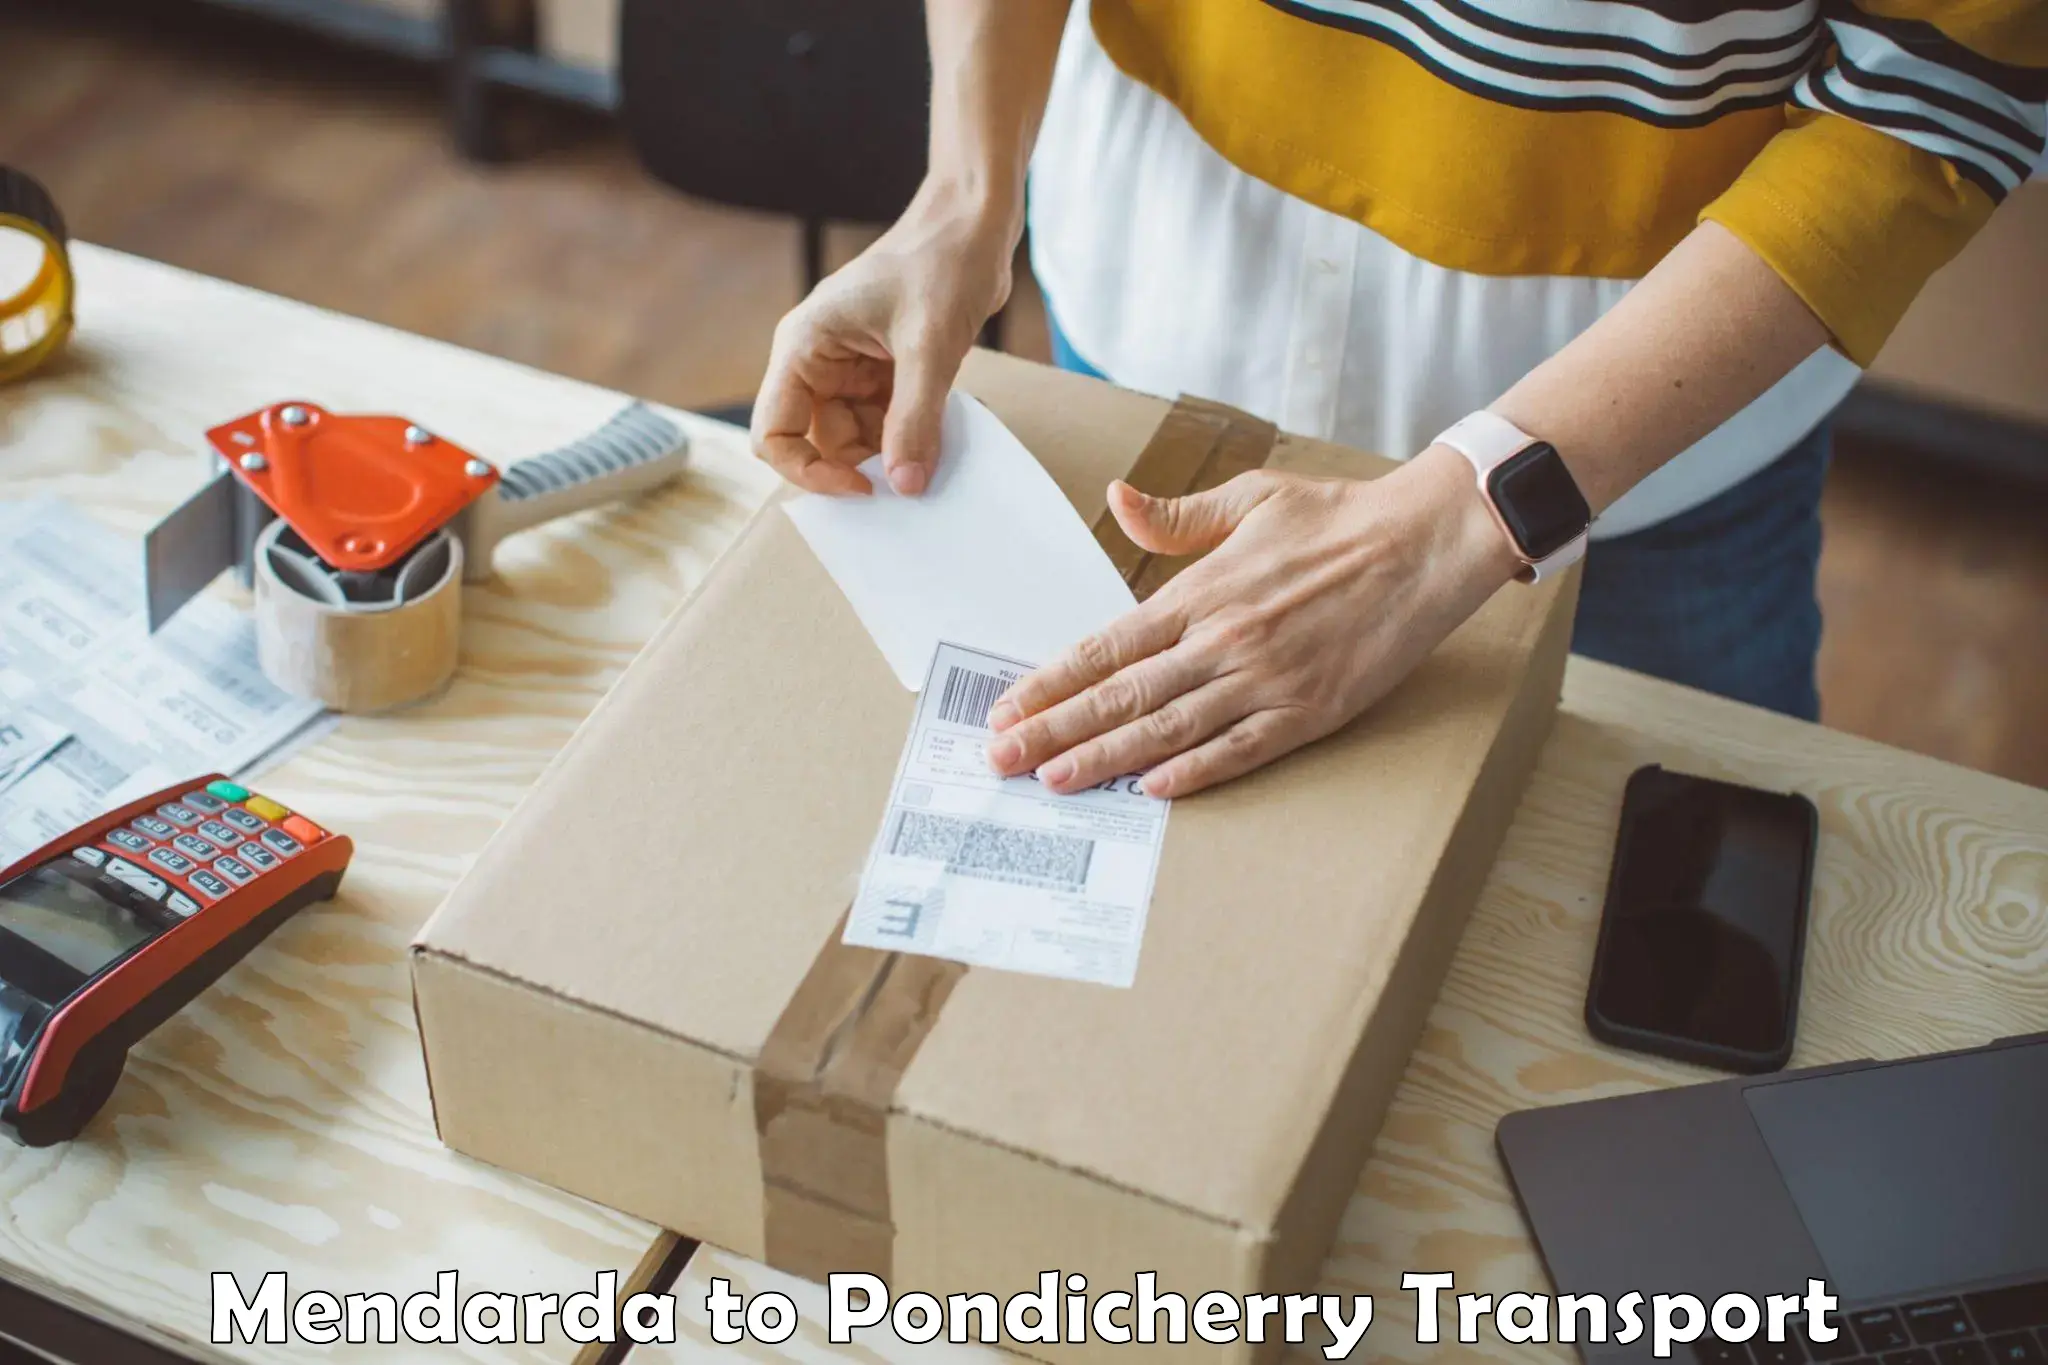 Furniture transport service Mendarda to Pondicherry University